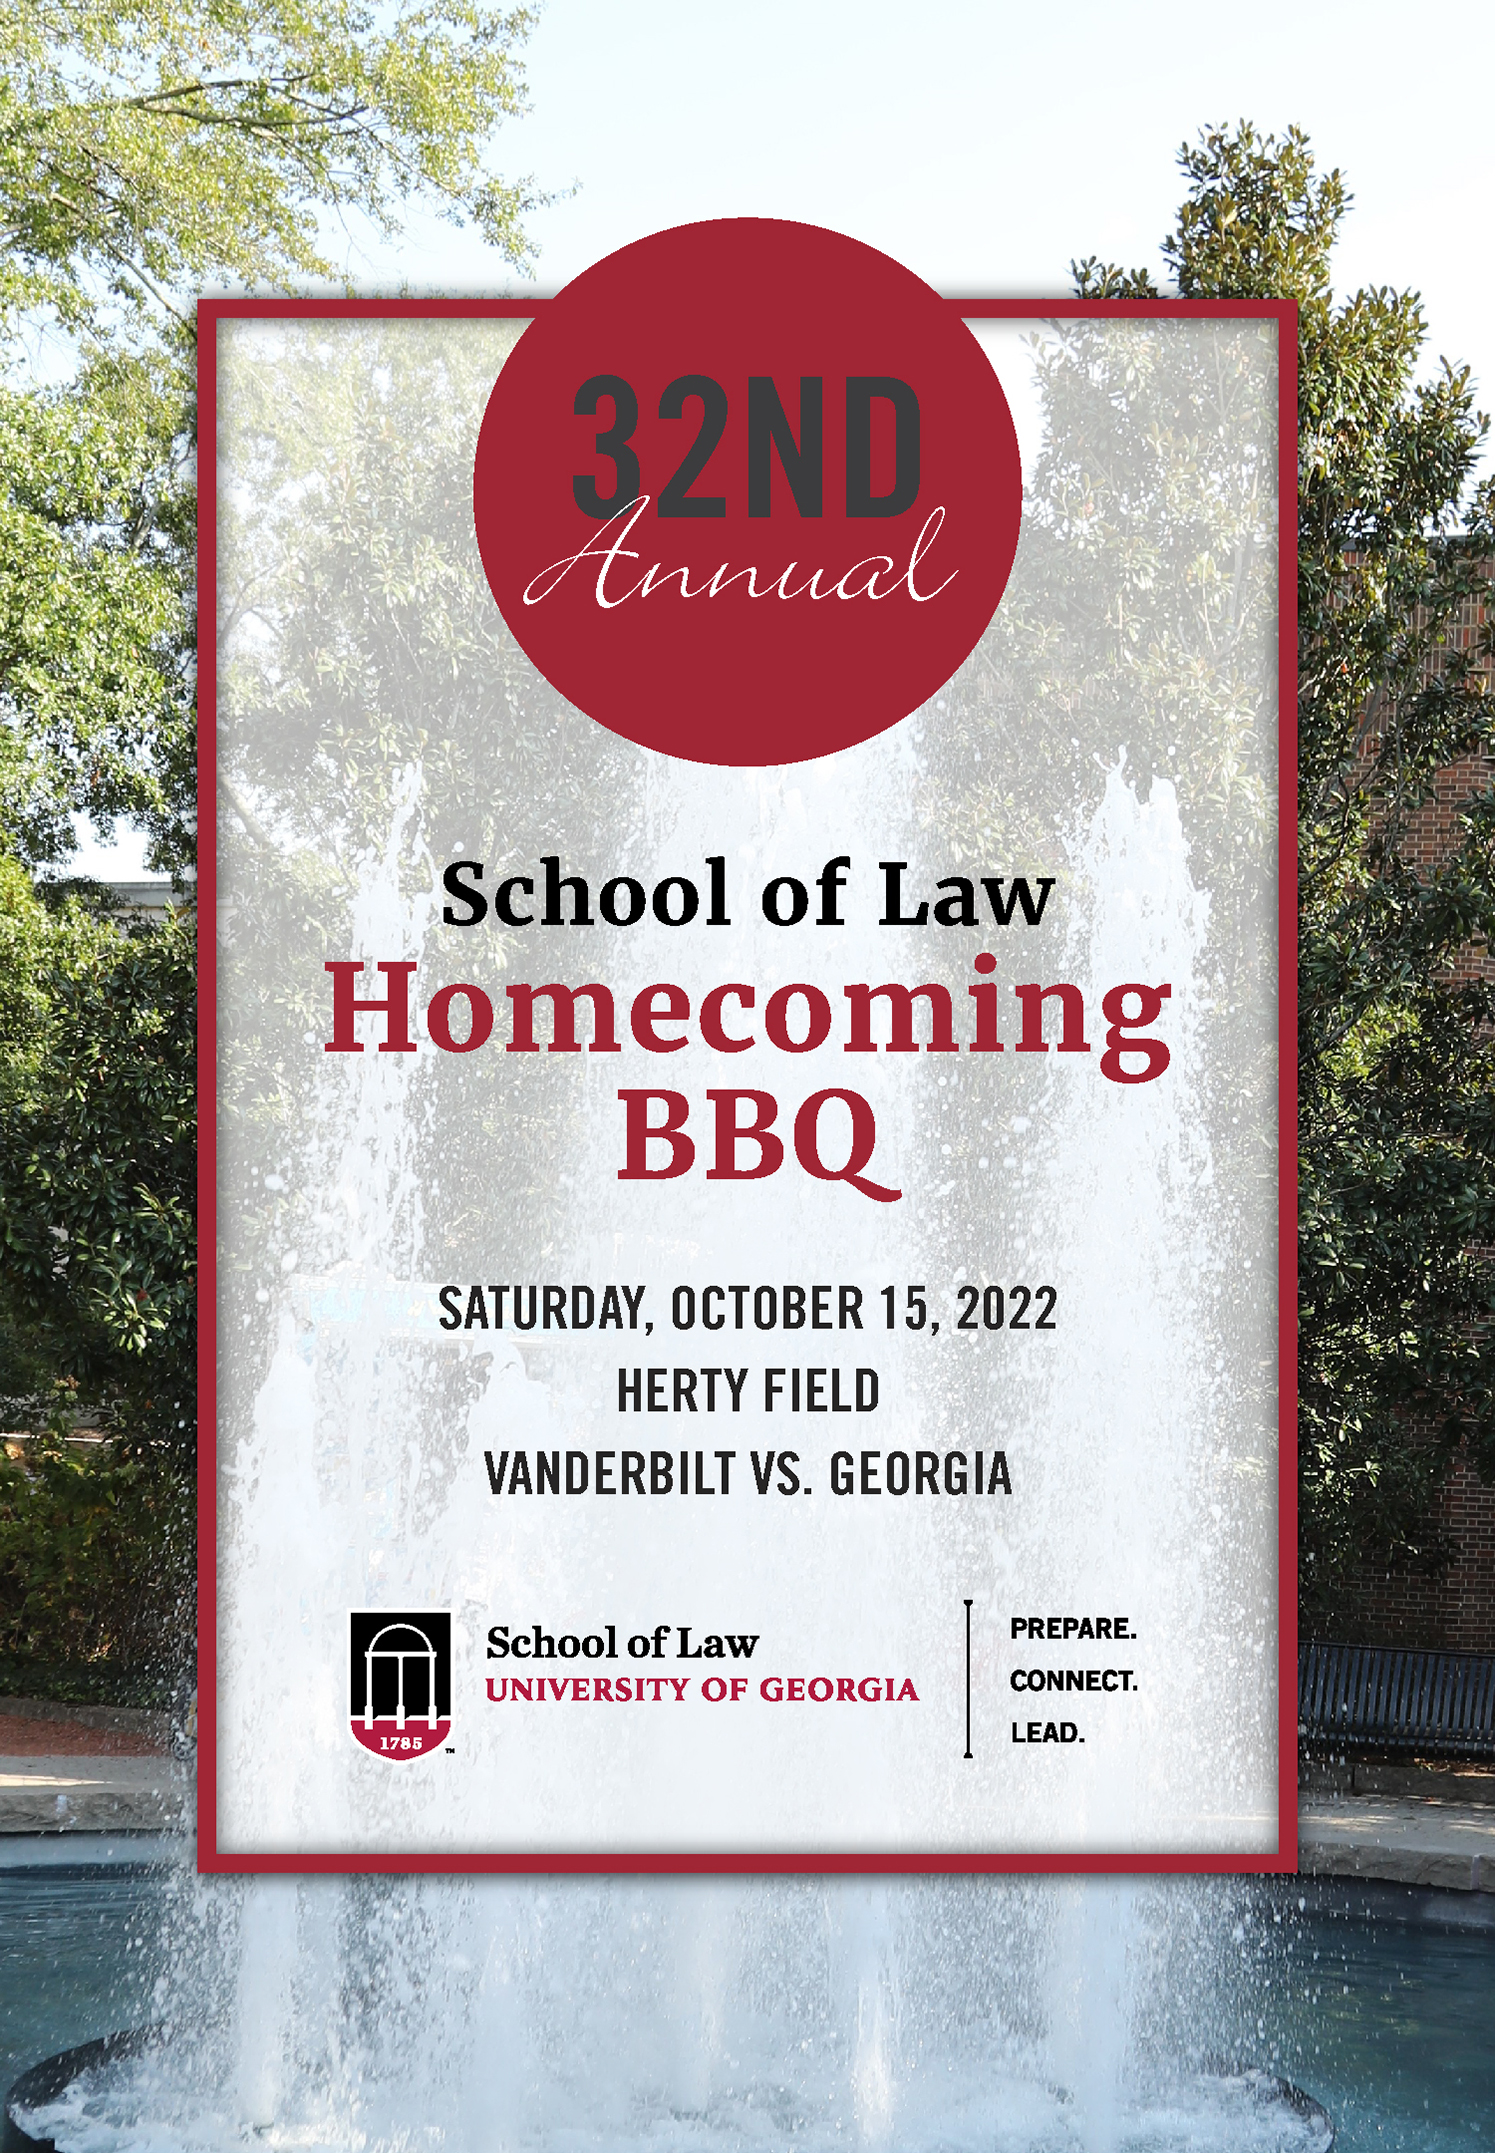 32nd Annual School of Law Homecoming BBQ, Saturday Oct 15, 2022. Herty Field. Vanderbilt vs. Georgia.